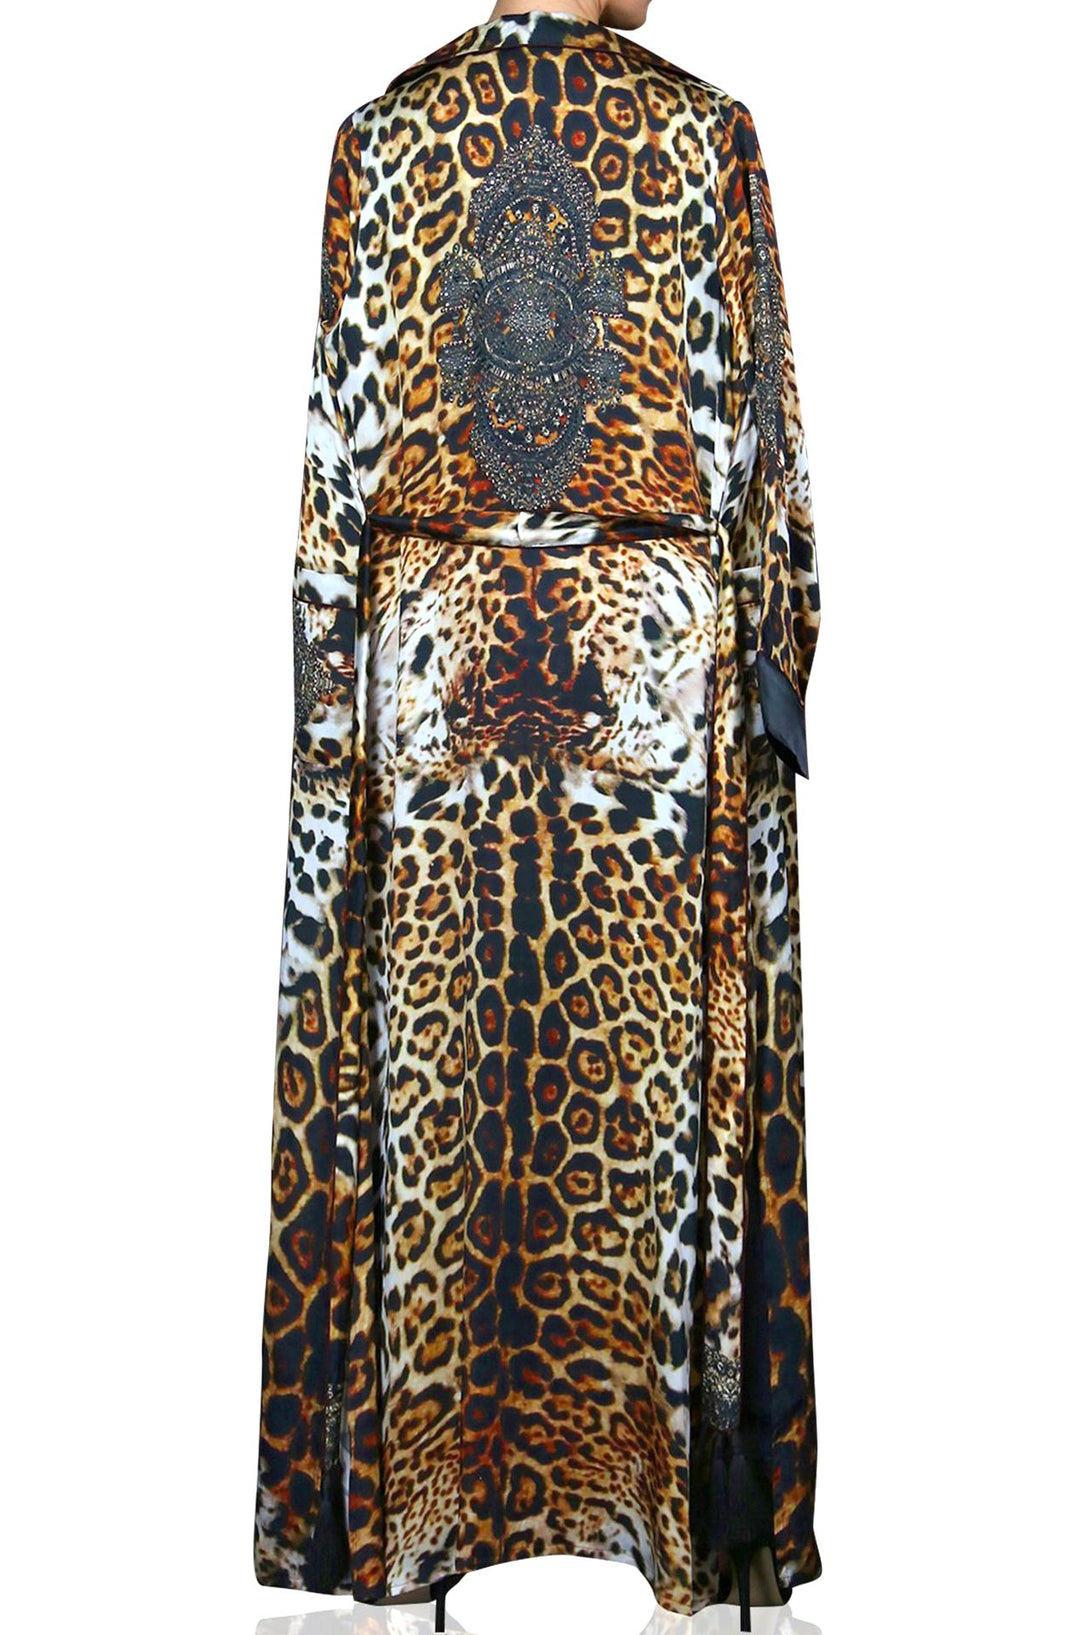 "silk leopard robe" "silk kimono for women" "kimono silk robe women's" "Shahida Parides" "womens long kimono robe" "womens long kimono robe""long kimono robe womens" "leopard robe womens" "Shahida Parides" "printed silk robe" "robe dress silk" "robe dress silk"